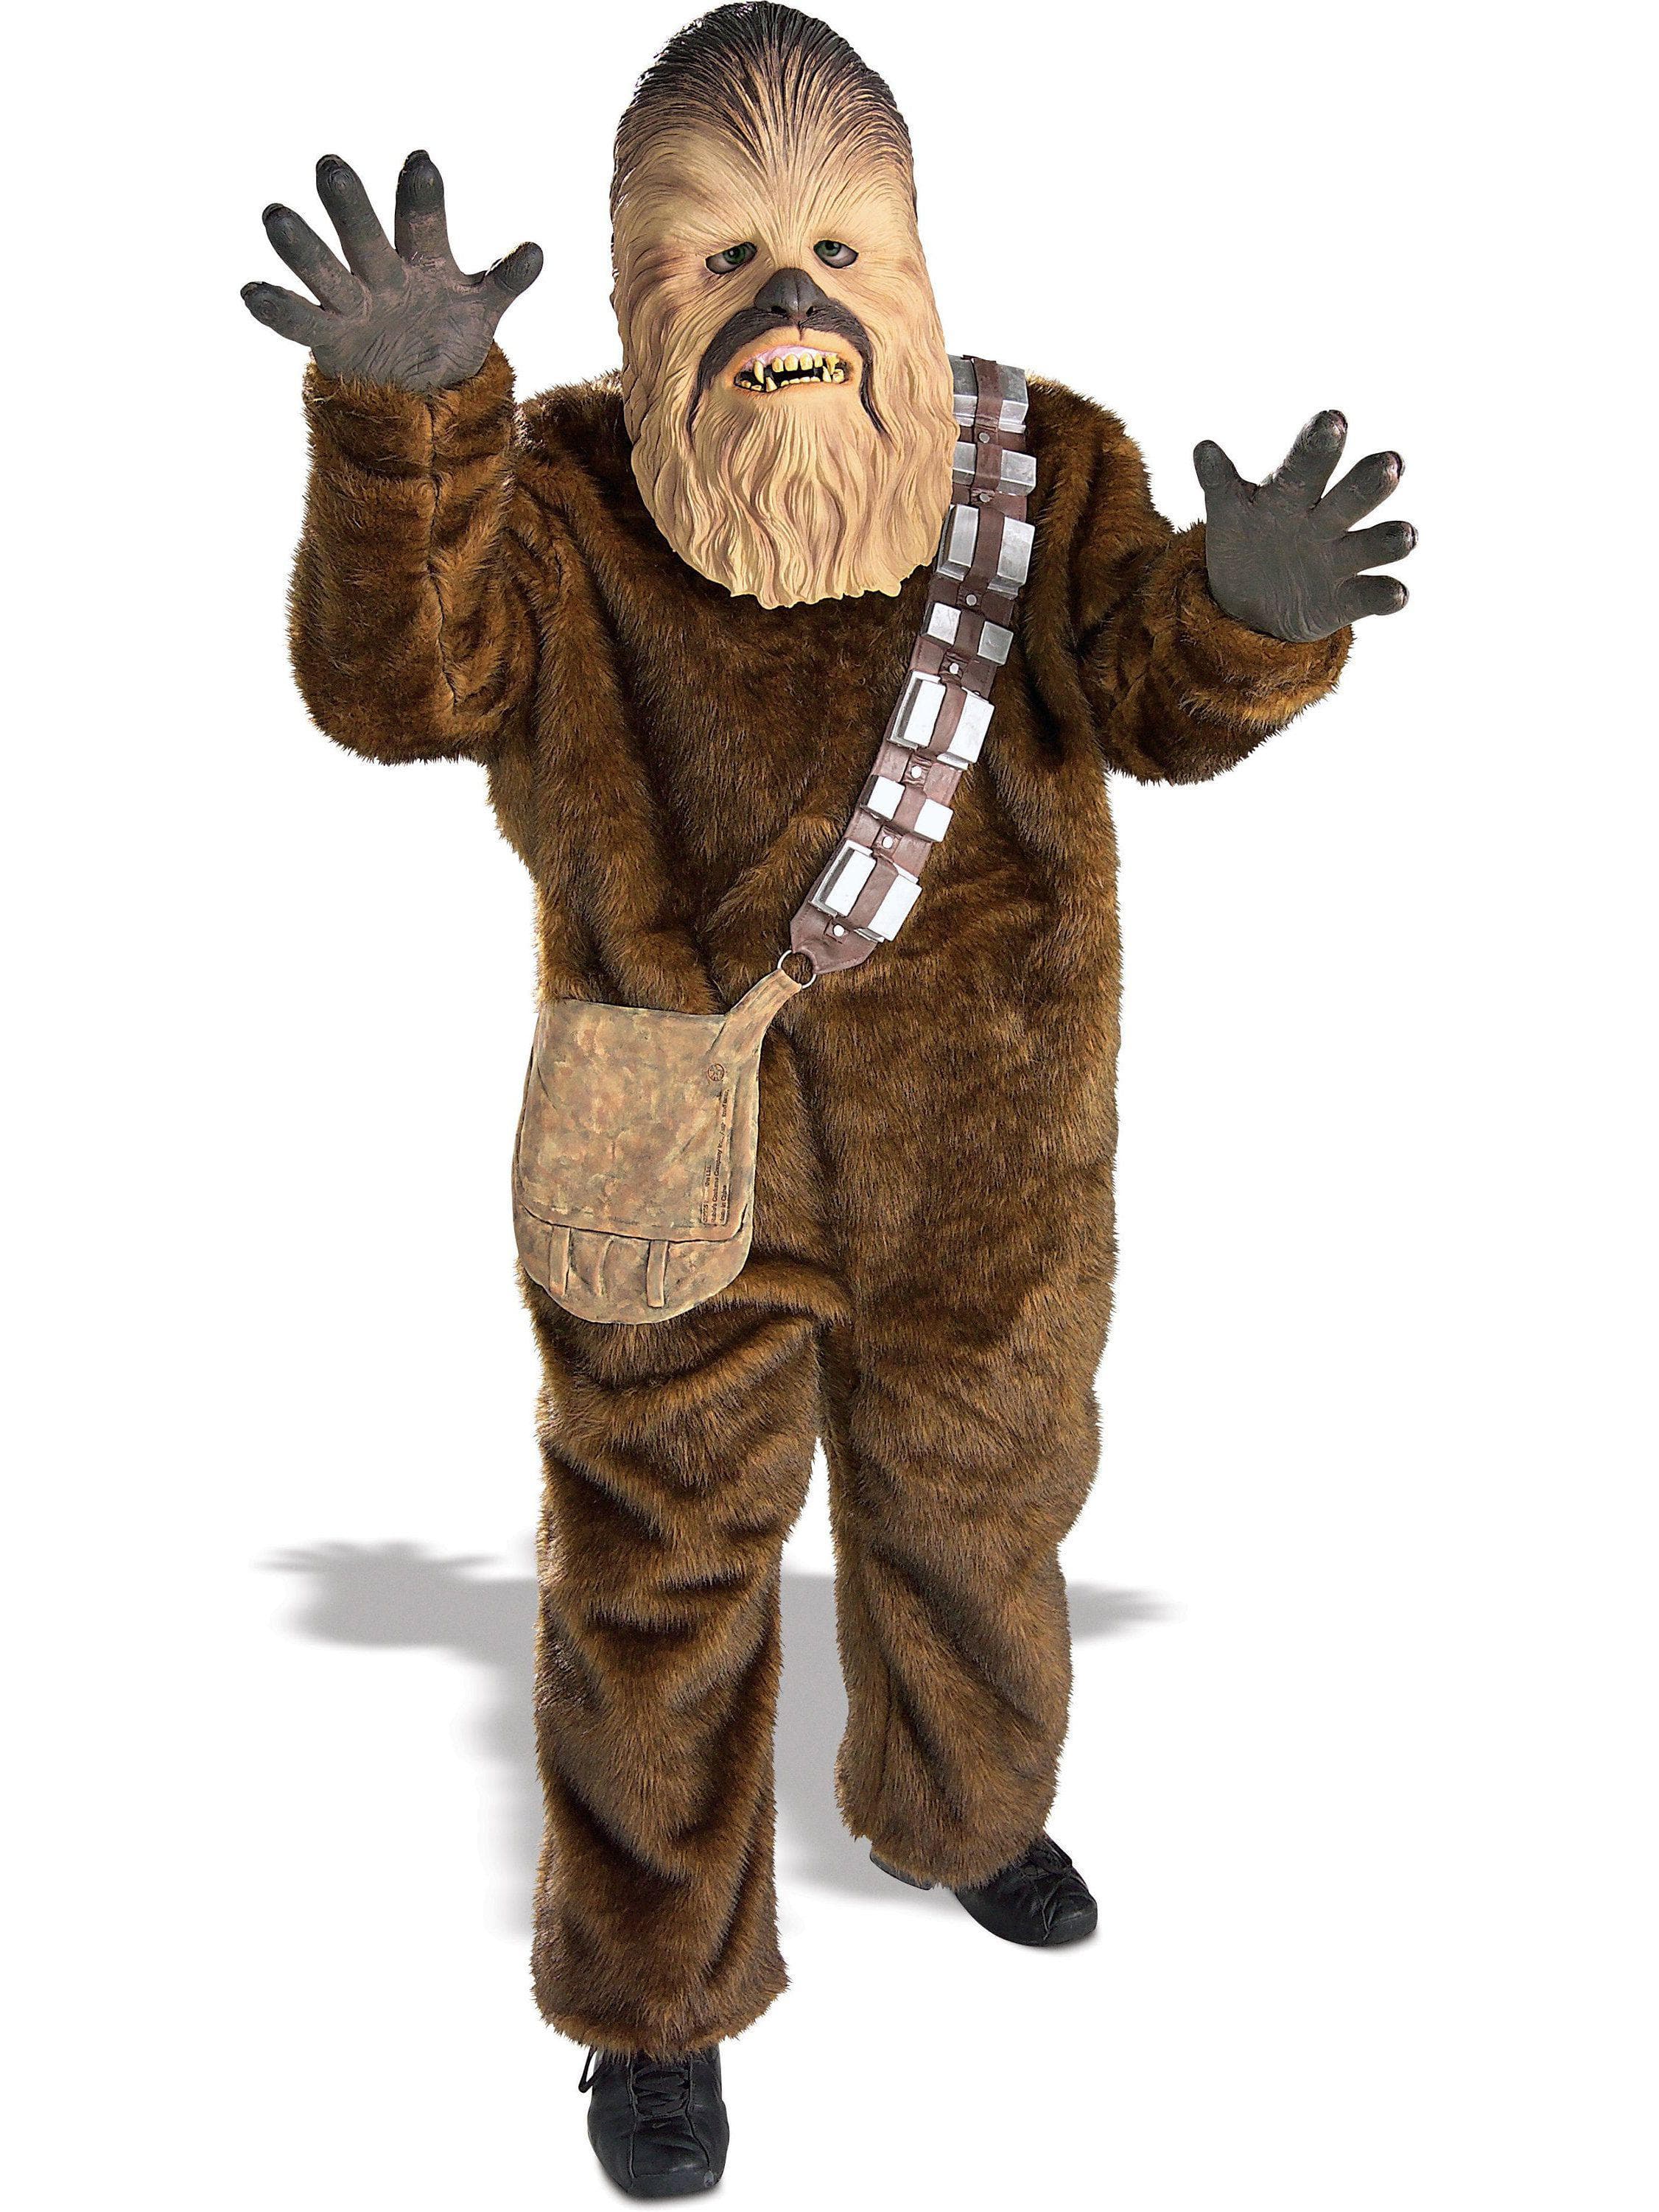 Kids Classic Star Wars Chewbacca Deluxe Costume - costumes.com